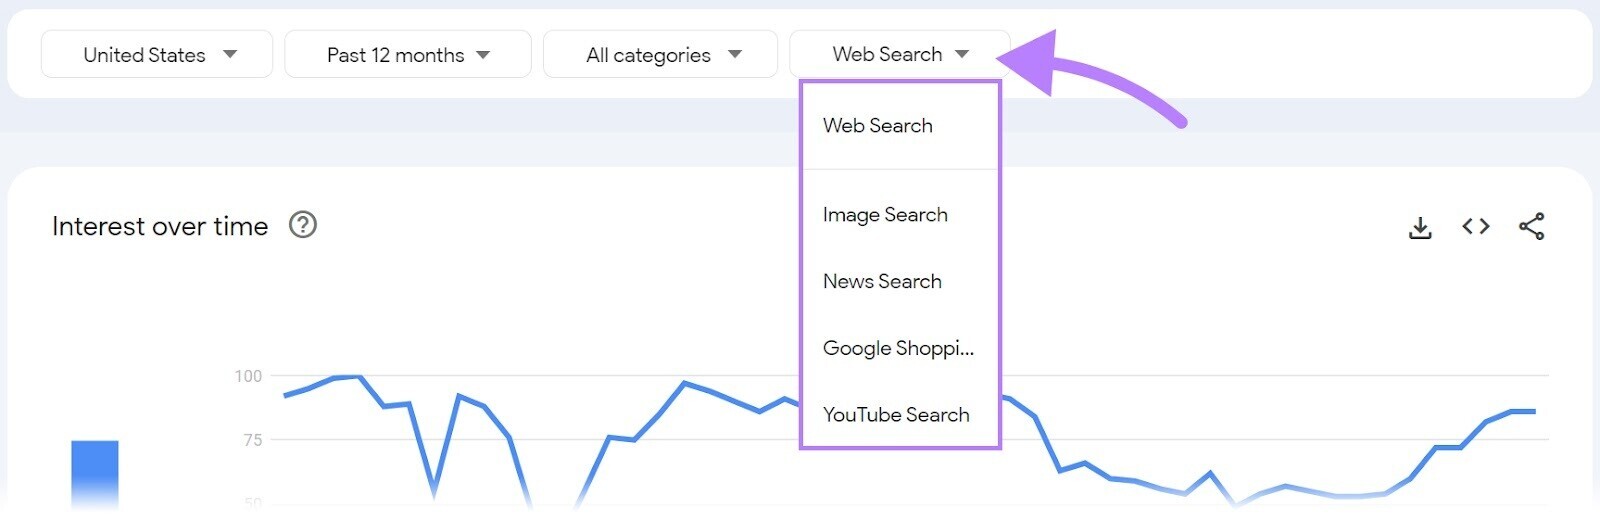 Search type drop-down menu in Google Trends